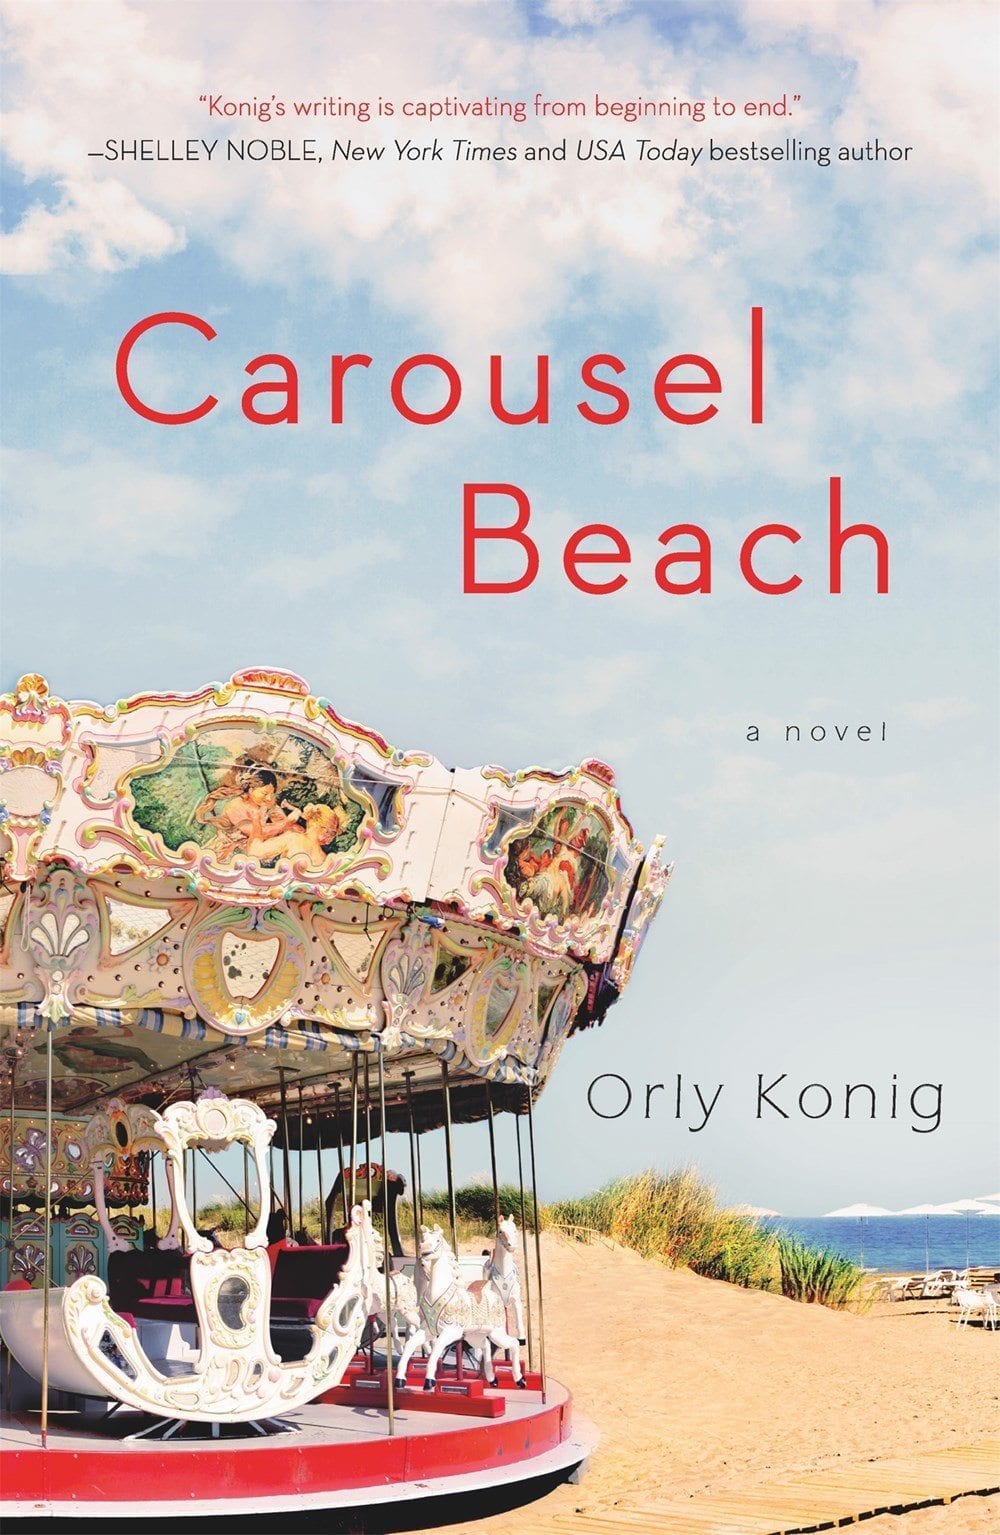 Carousel Beach by Orly Konig